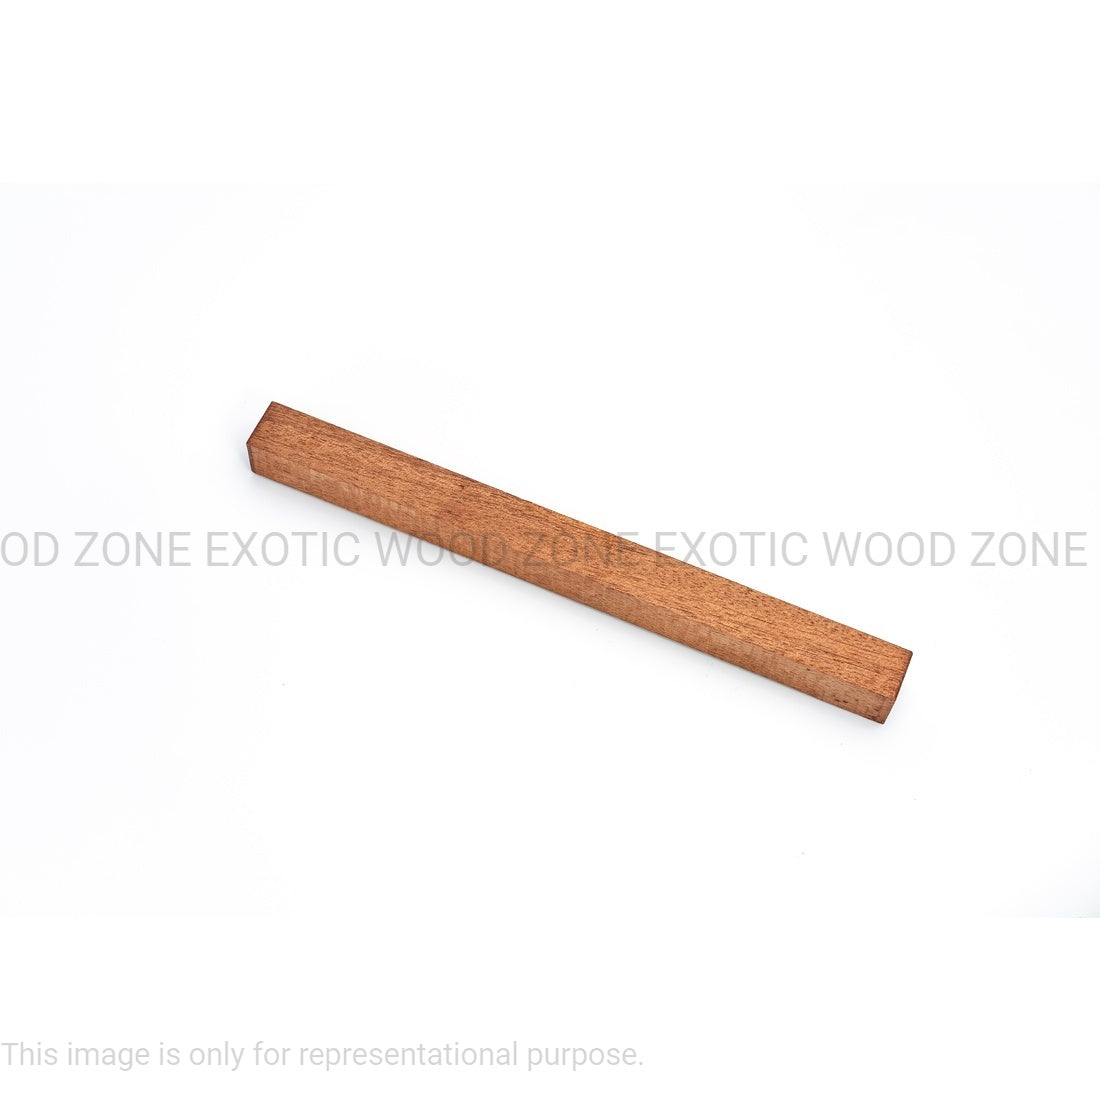 Honduran Mahogany Hobby Wood/ Turning Wood Blanks 1 x 1 x 12 inches